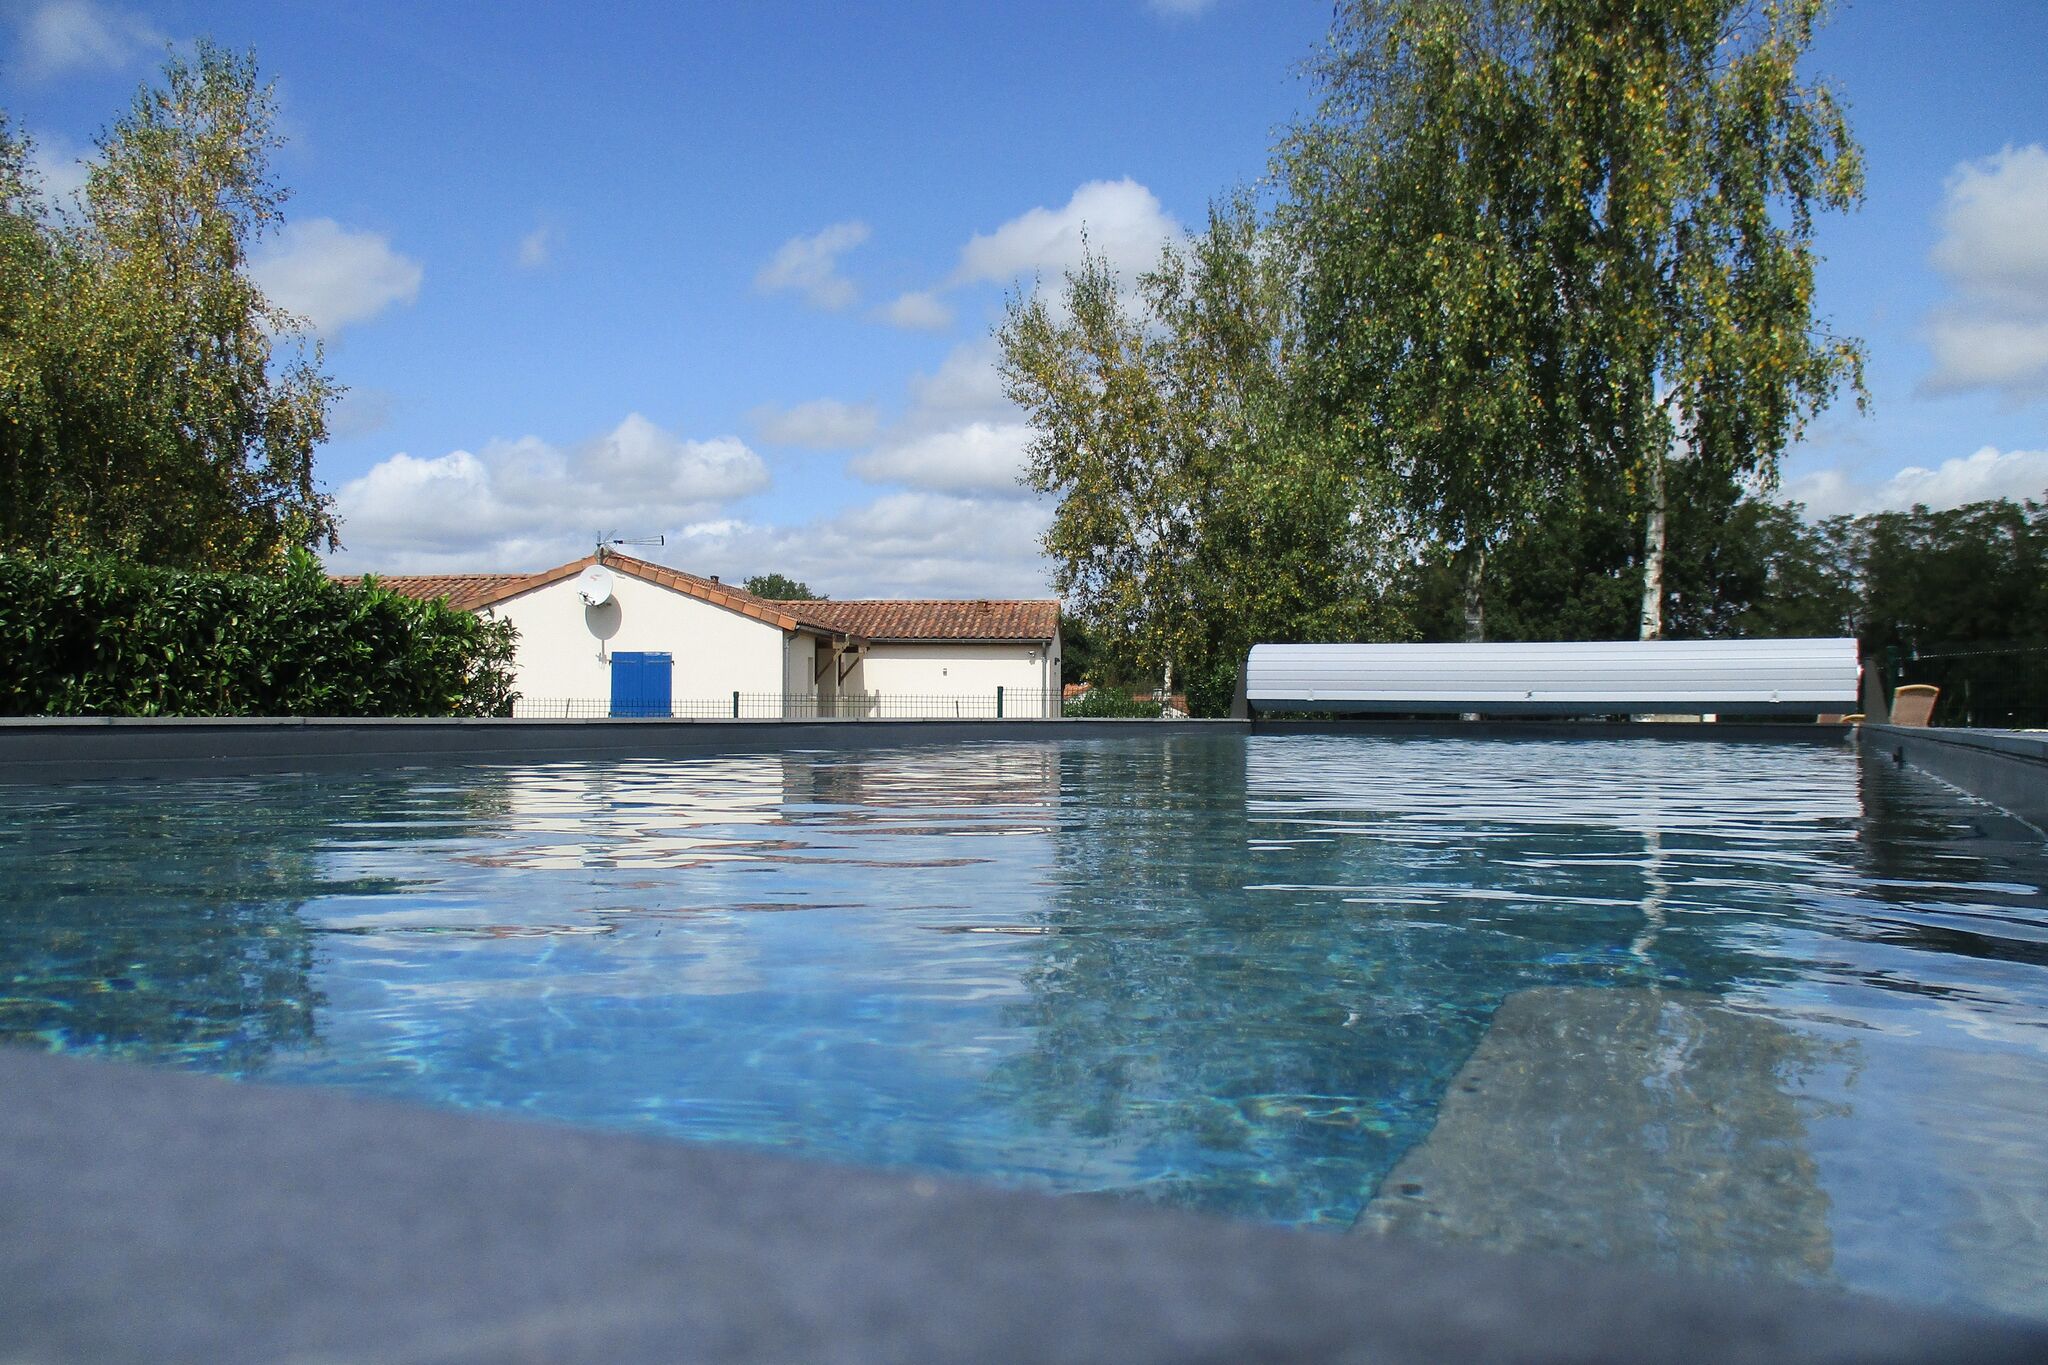 Verwarmd privézwembad Villa in Les Forges, naast de 27-holes golfbaan